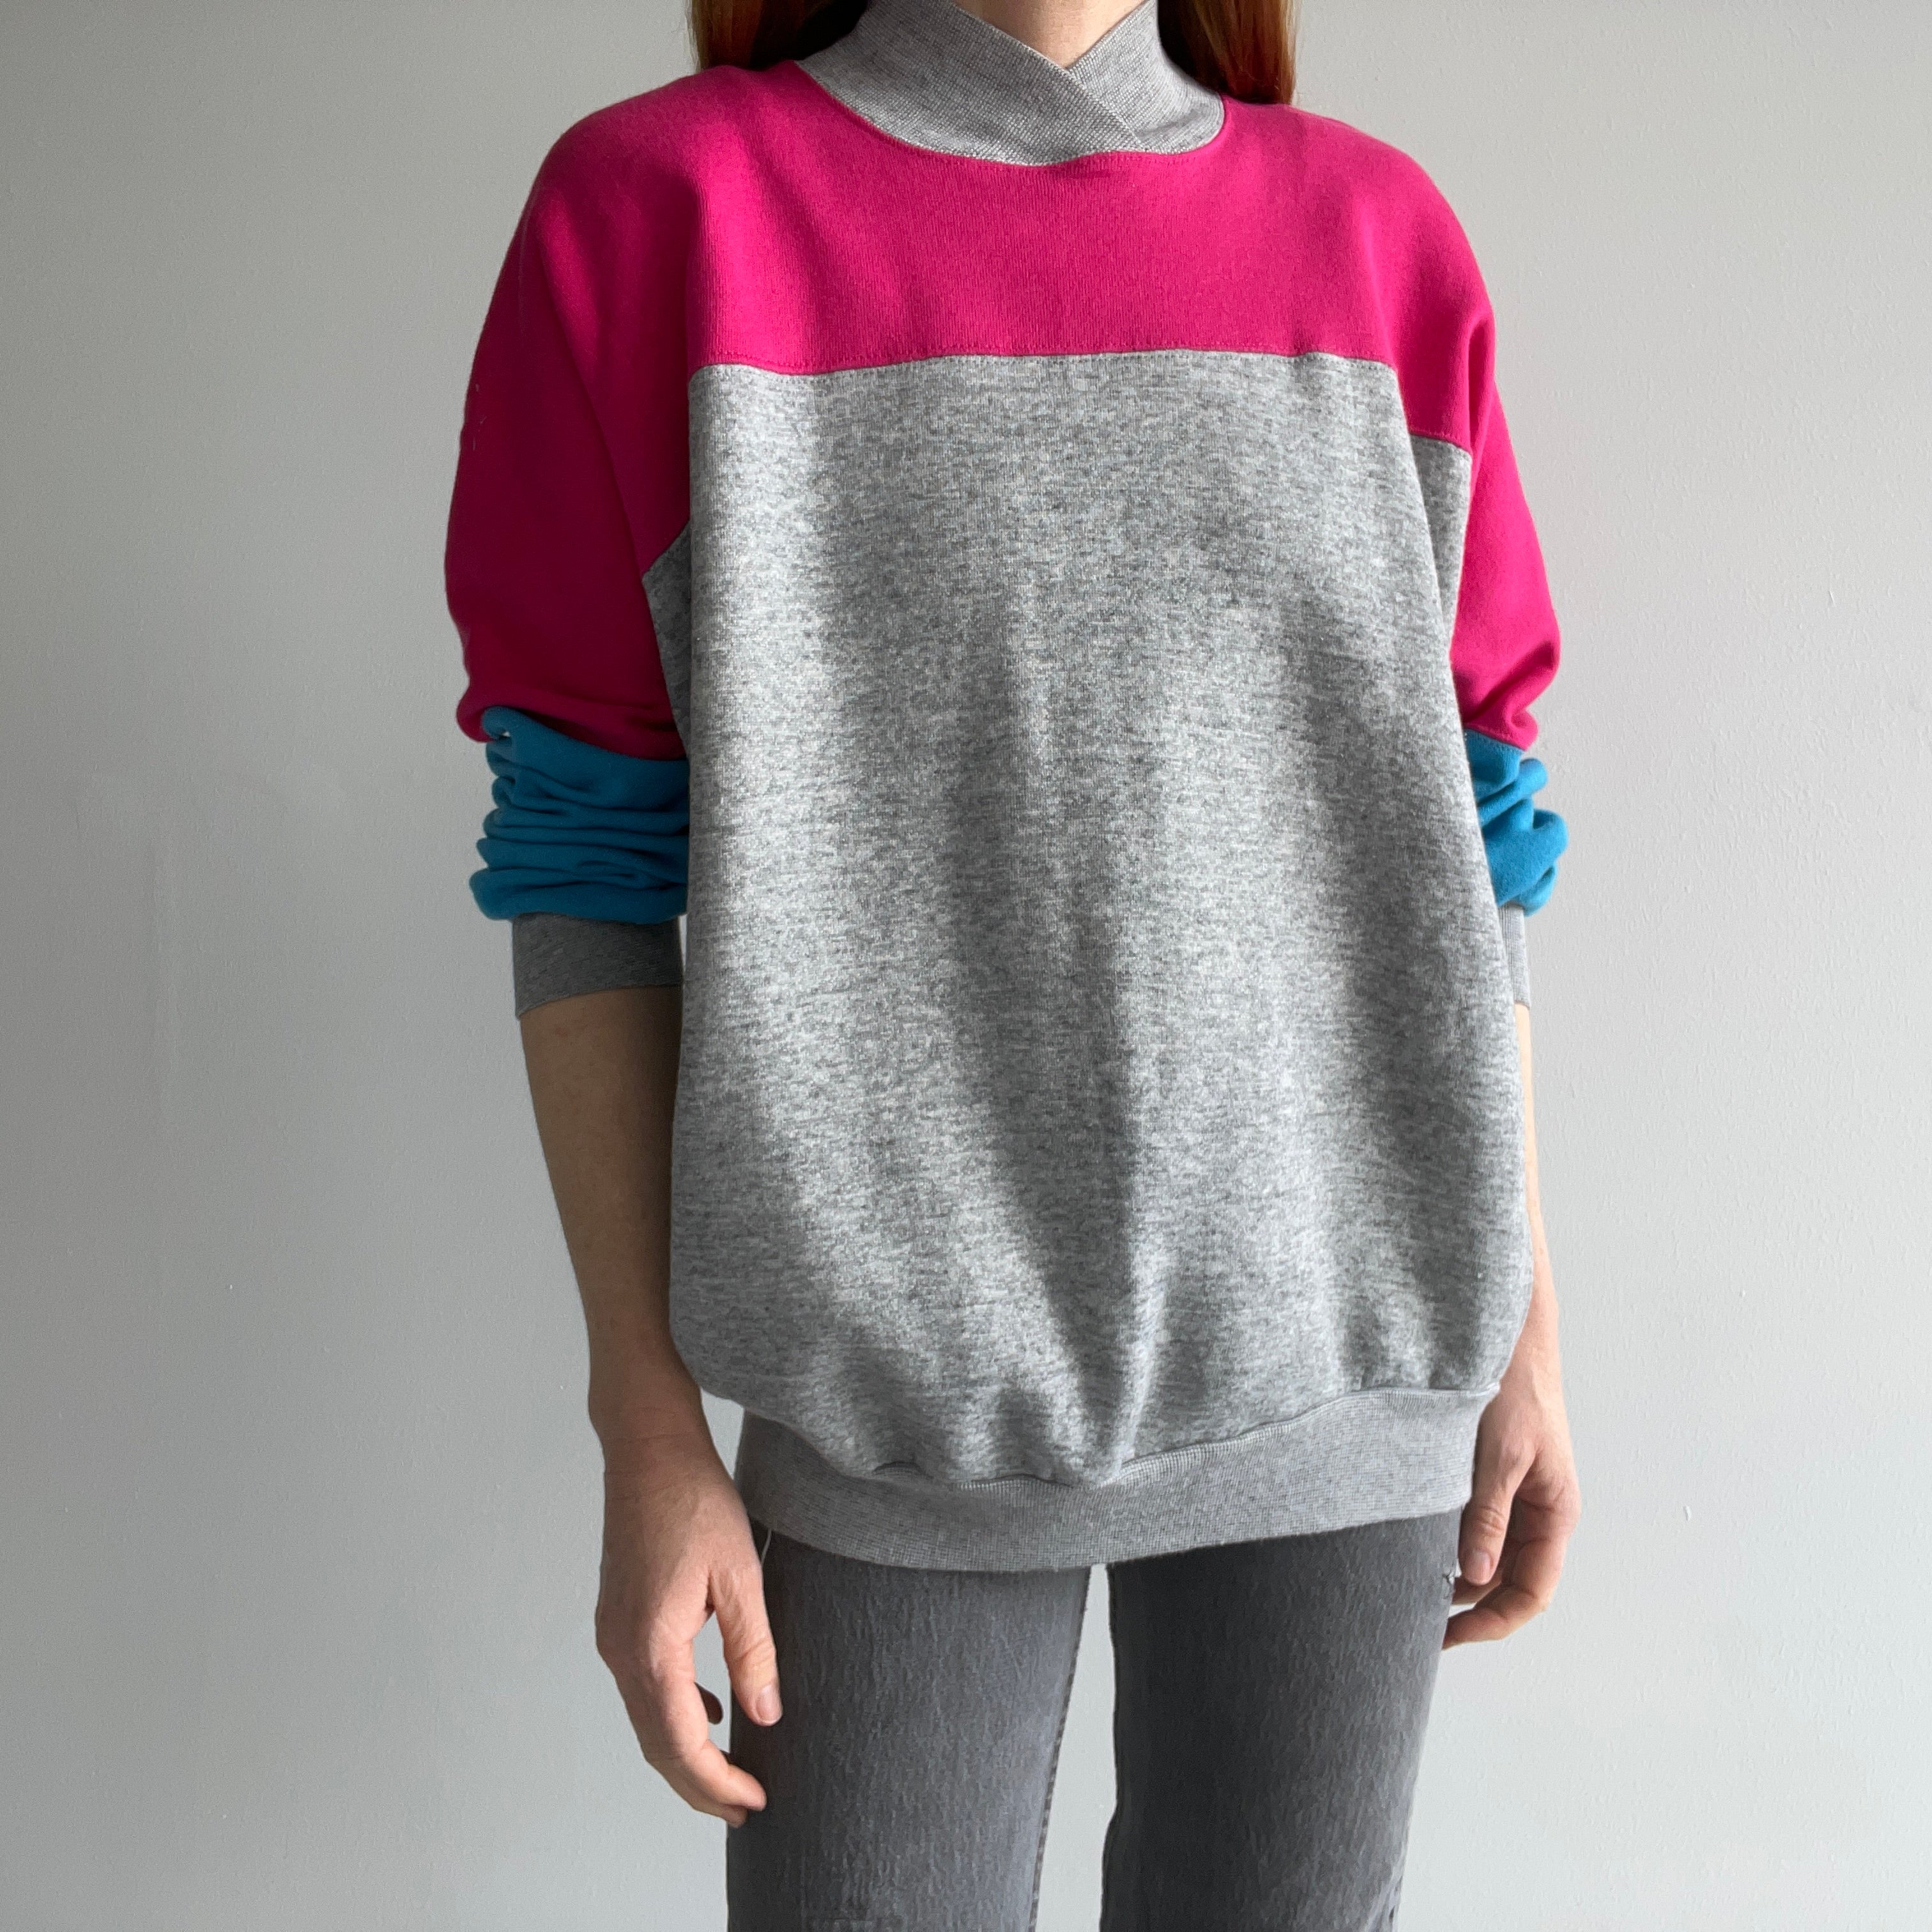 1980s Color Block Sweatshirt by Tultex - Swoon